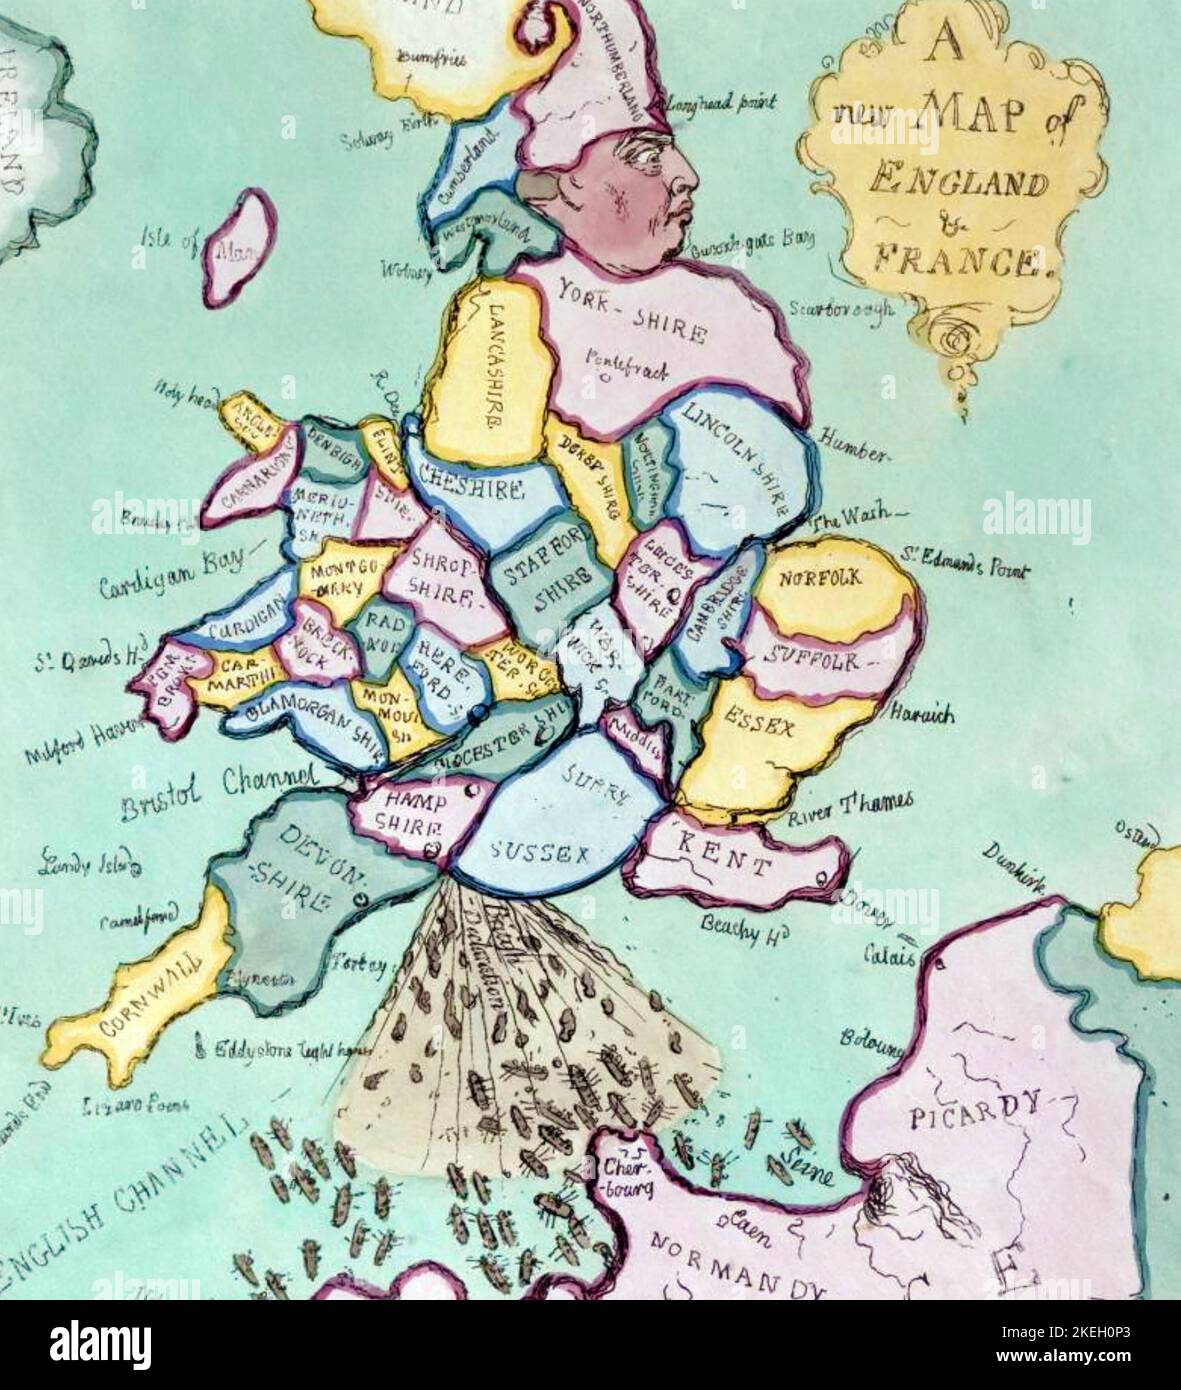 JAMES GILLRAY (7565-1818) cartoonista inglese. 'A New Map of England & France - l'invasione francese o John Bull bombardare le Bum-Boats' - dettaglio. Foto Stock